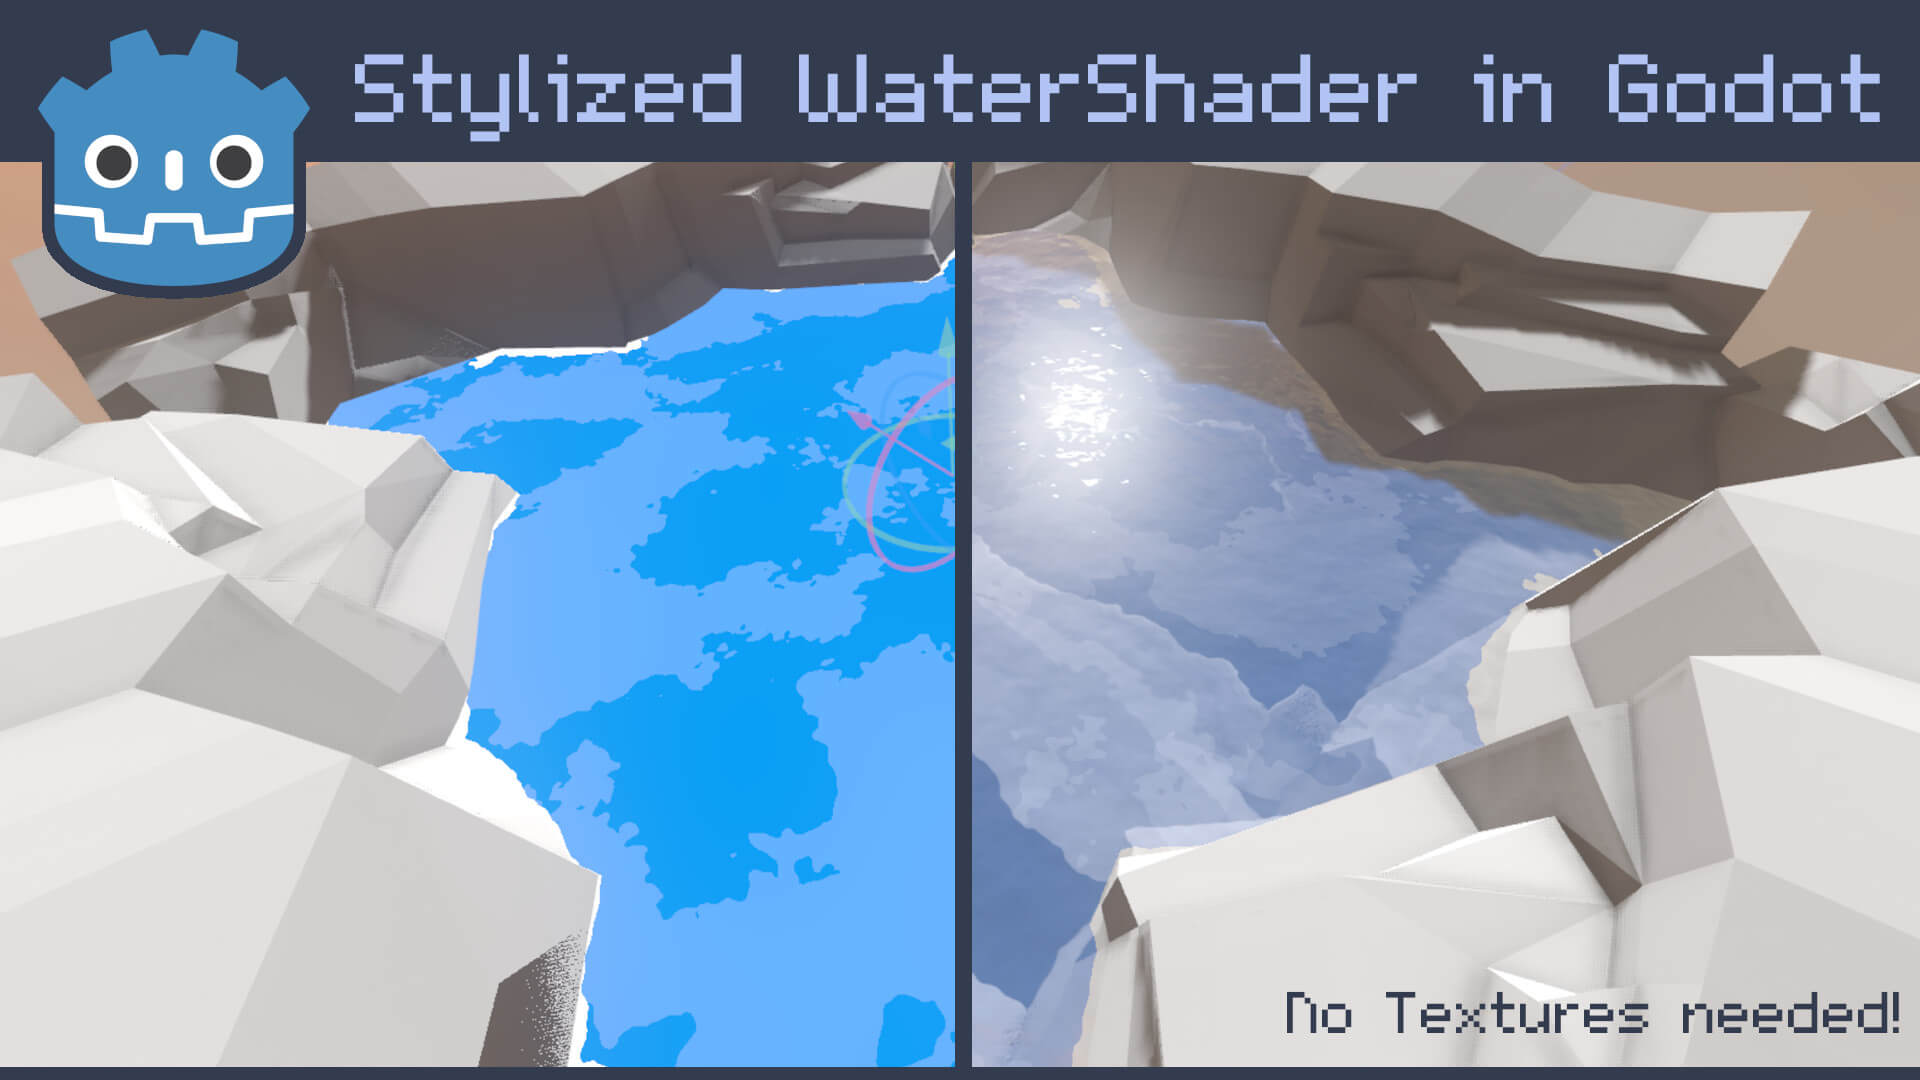 eau stylisée shader godot